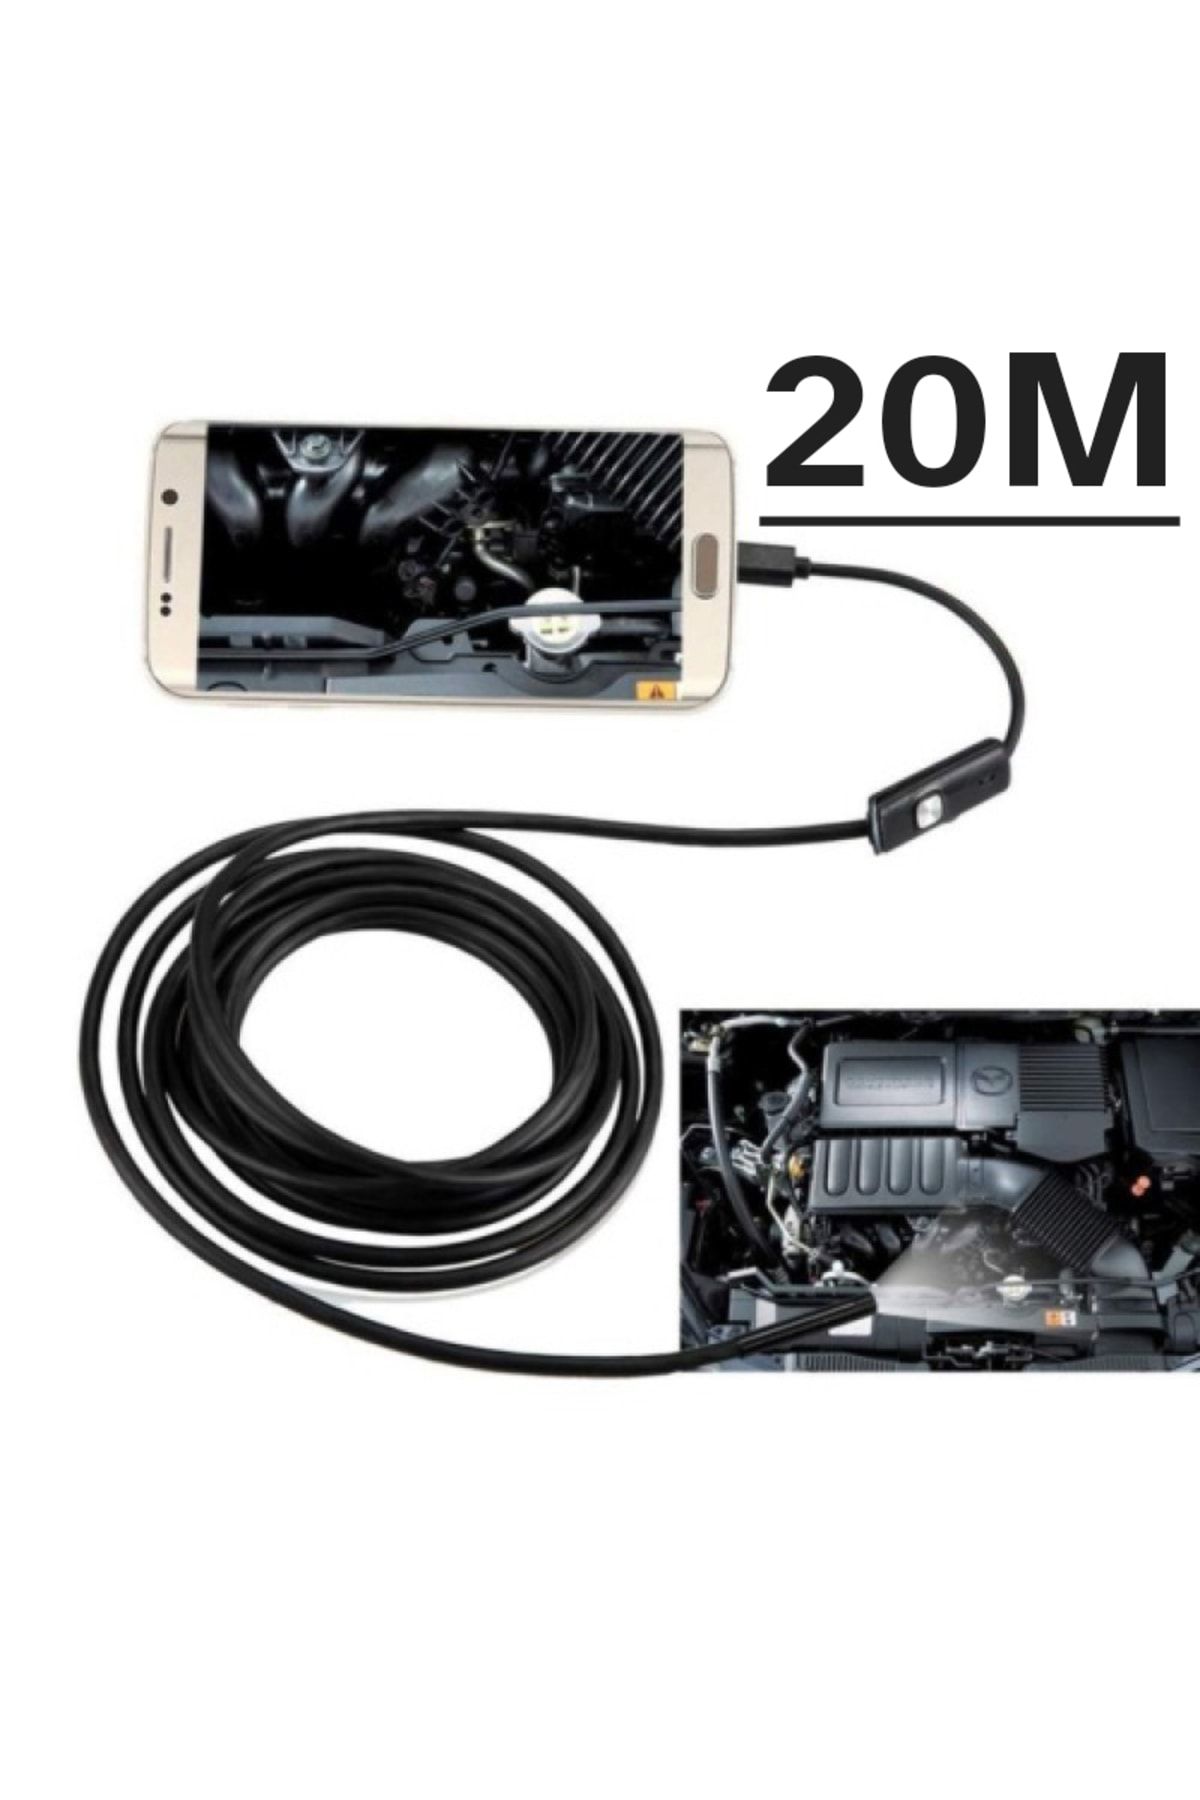 yoosee Usb Led Işıklı Tel Yılan 1080p Full Hd Endoskop Su Geçirmez Kamera 20 Mt